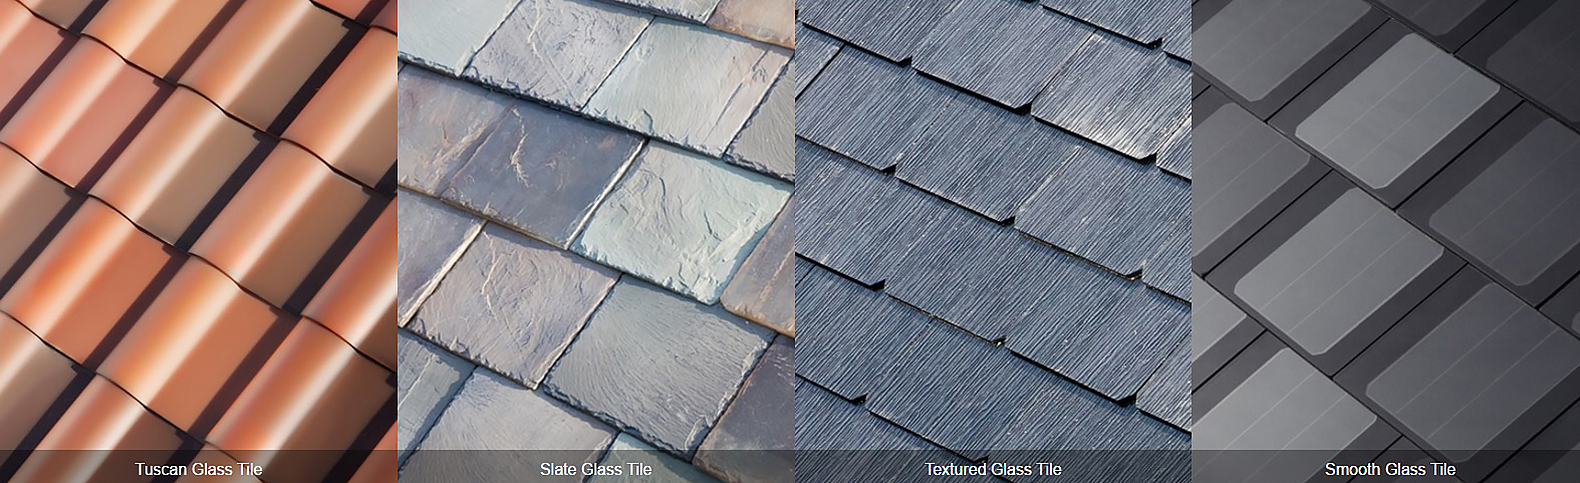 tesla-solar-roof-tiles